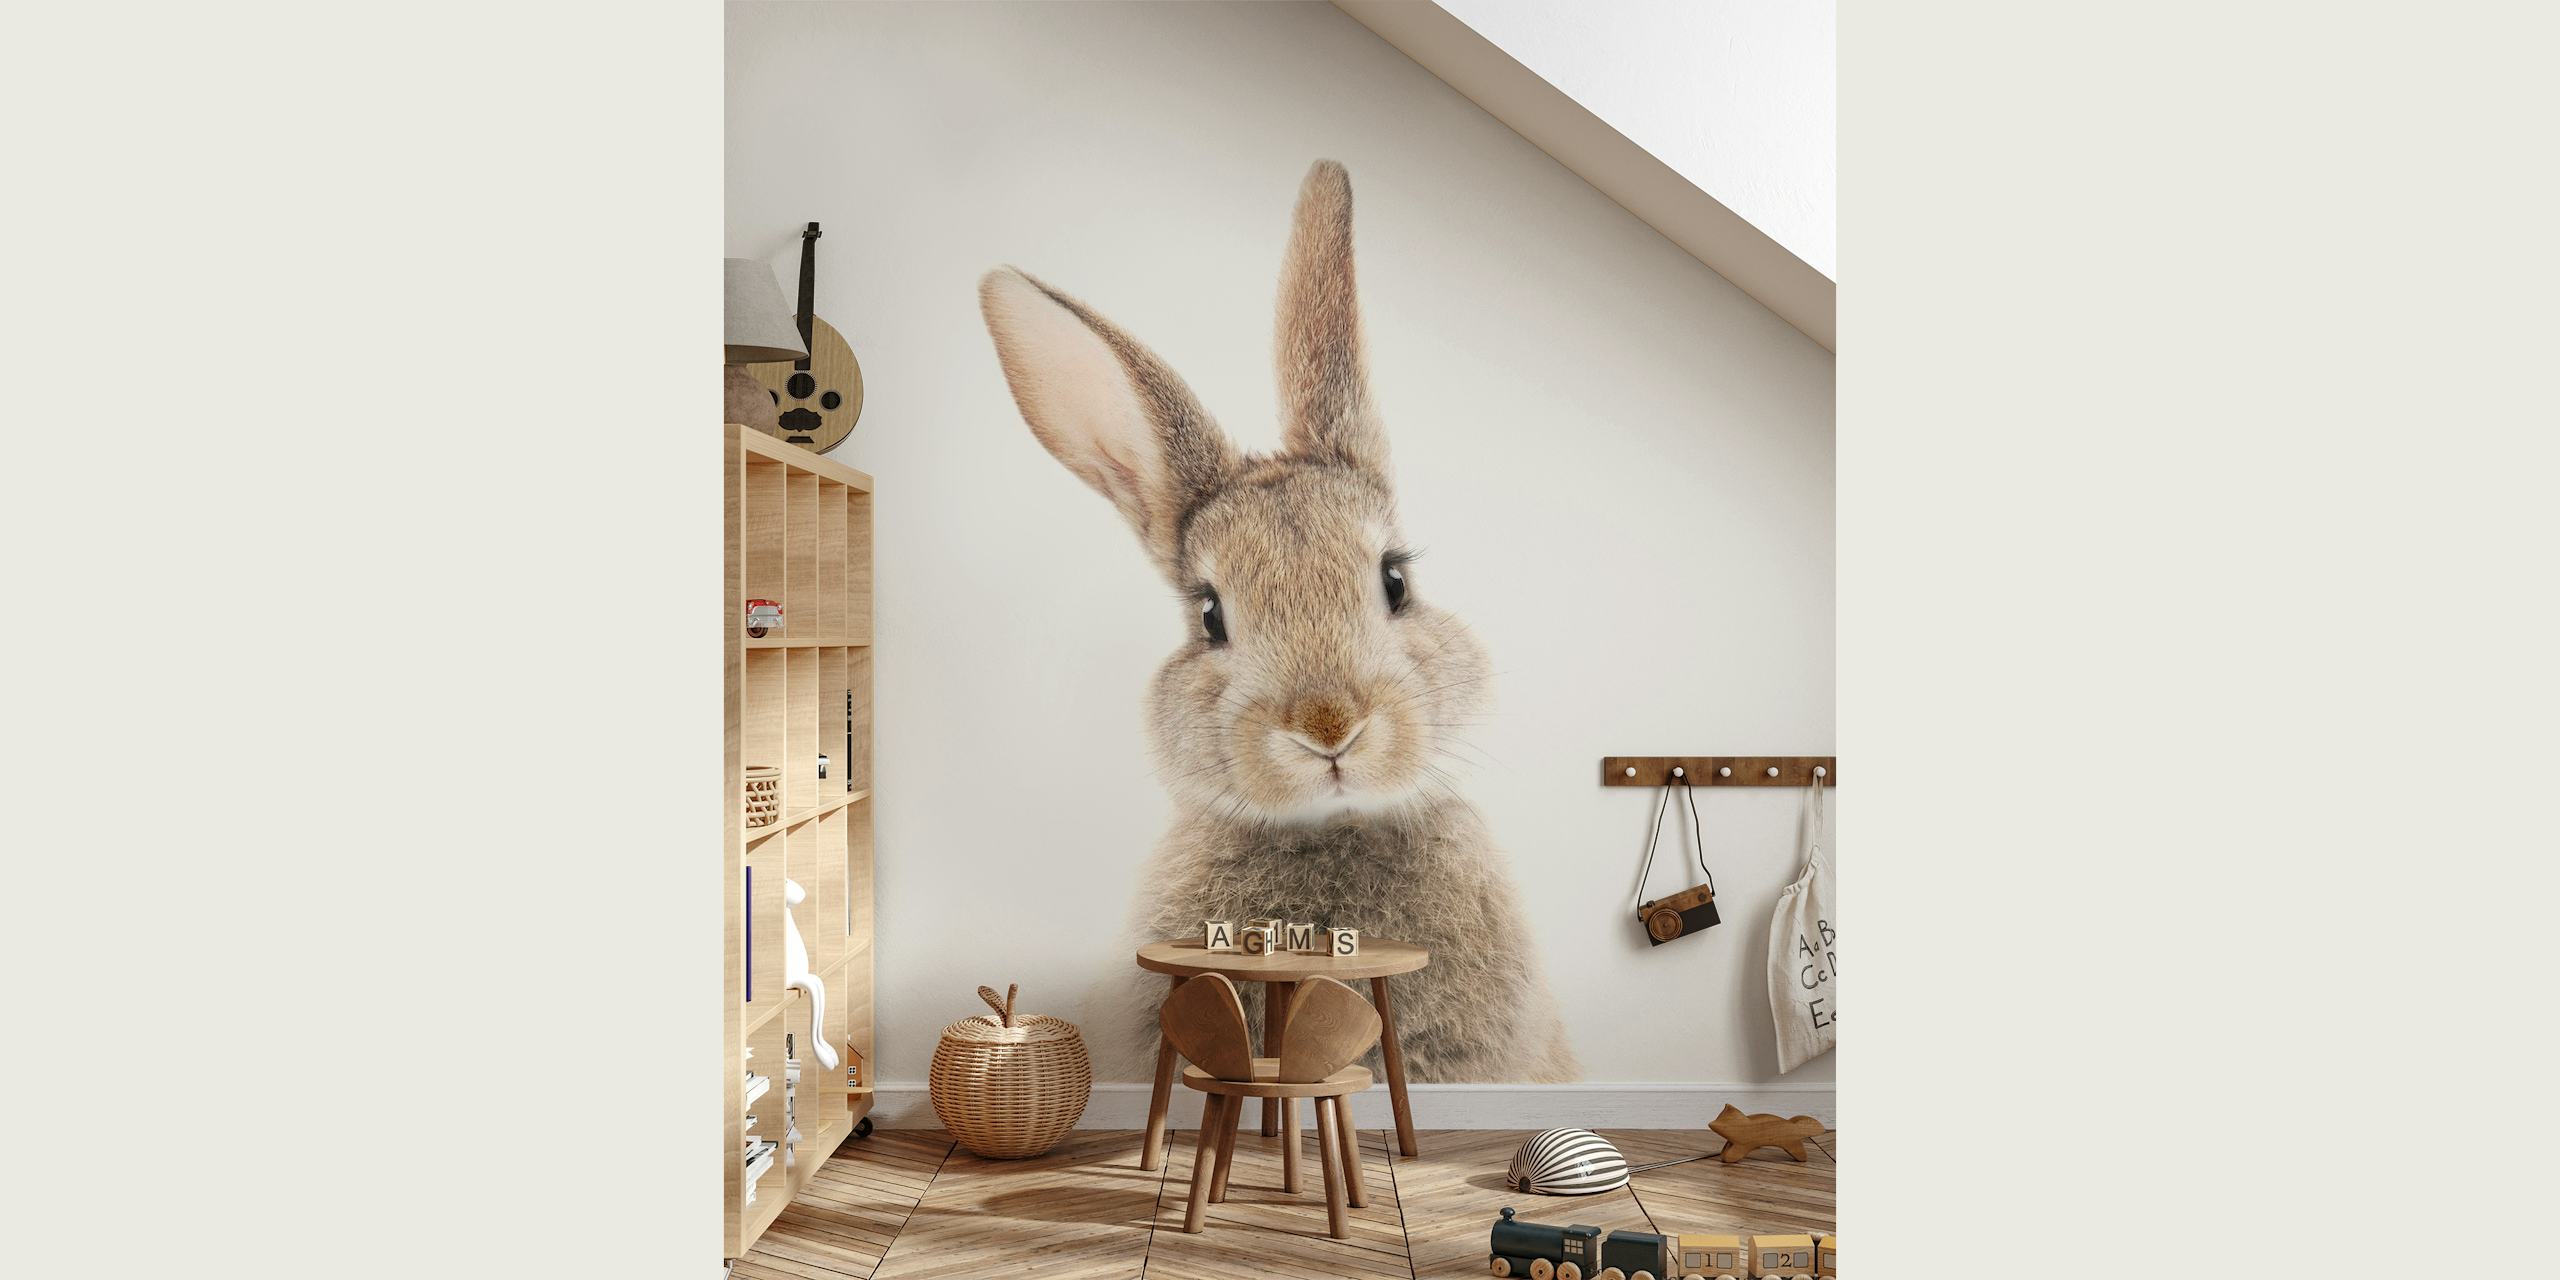 Adorable peekaboo bunny wall mural for playful interior decor